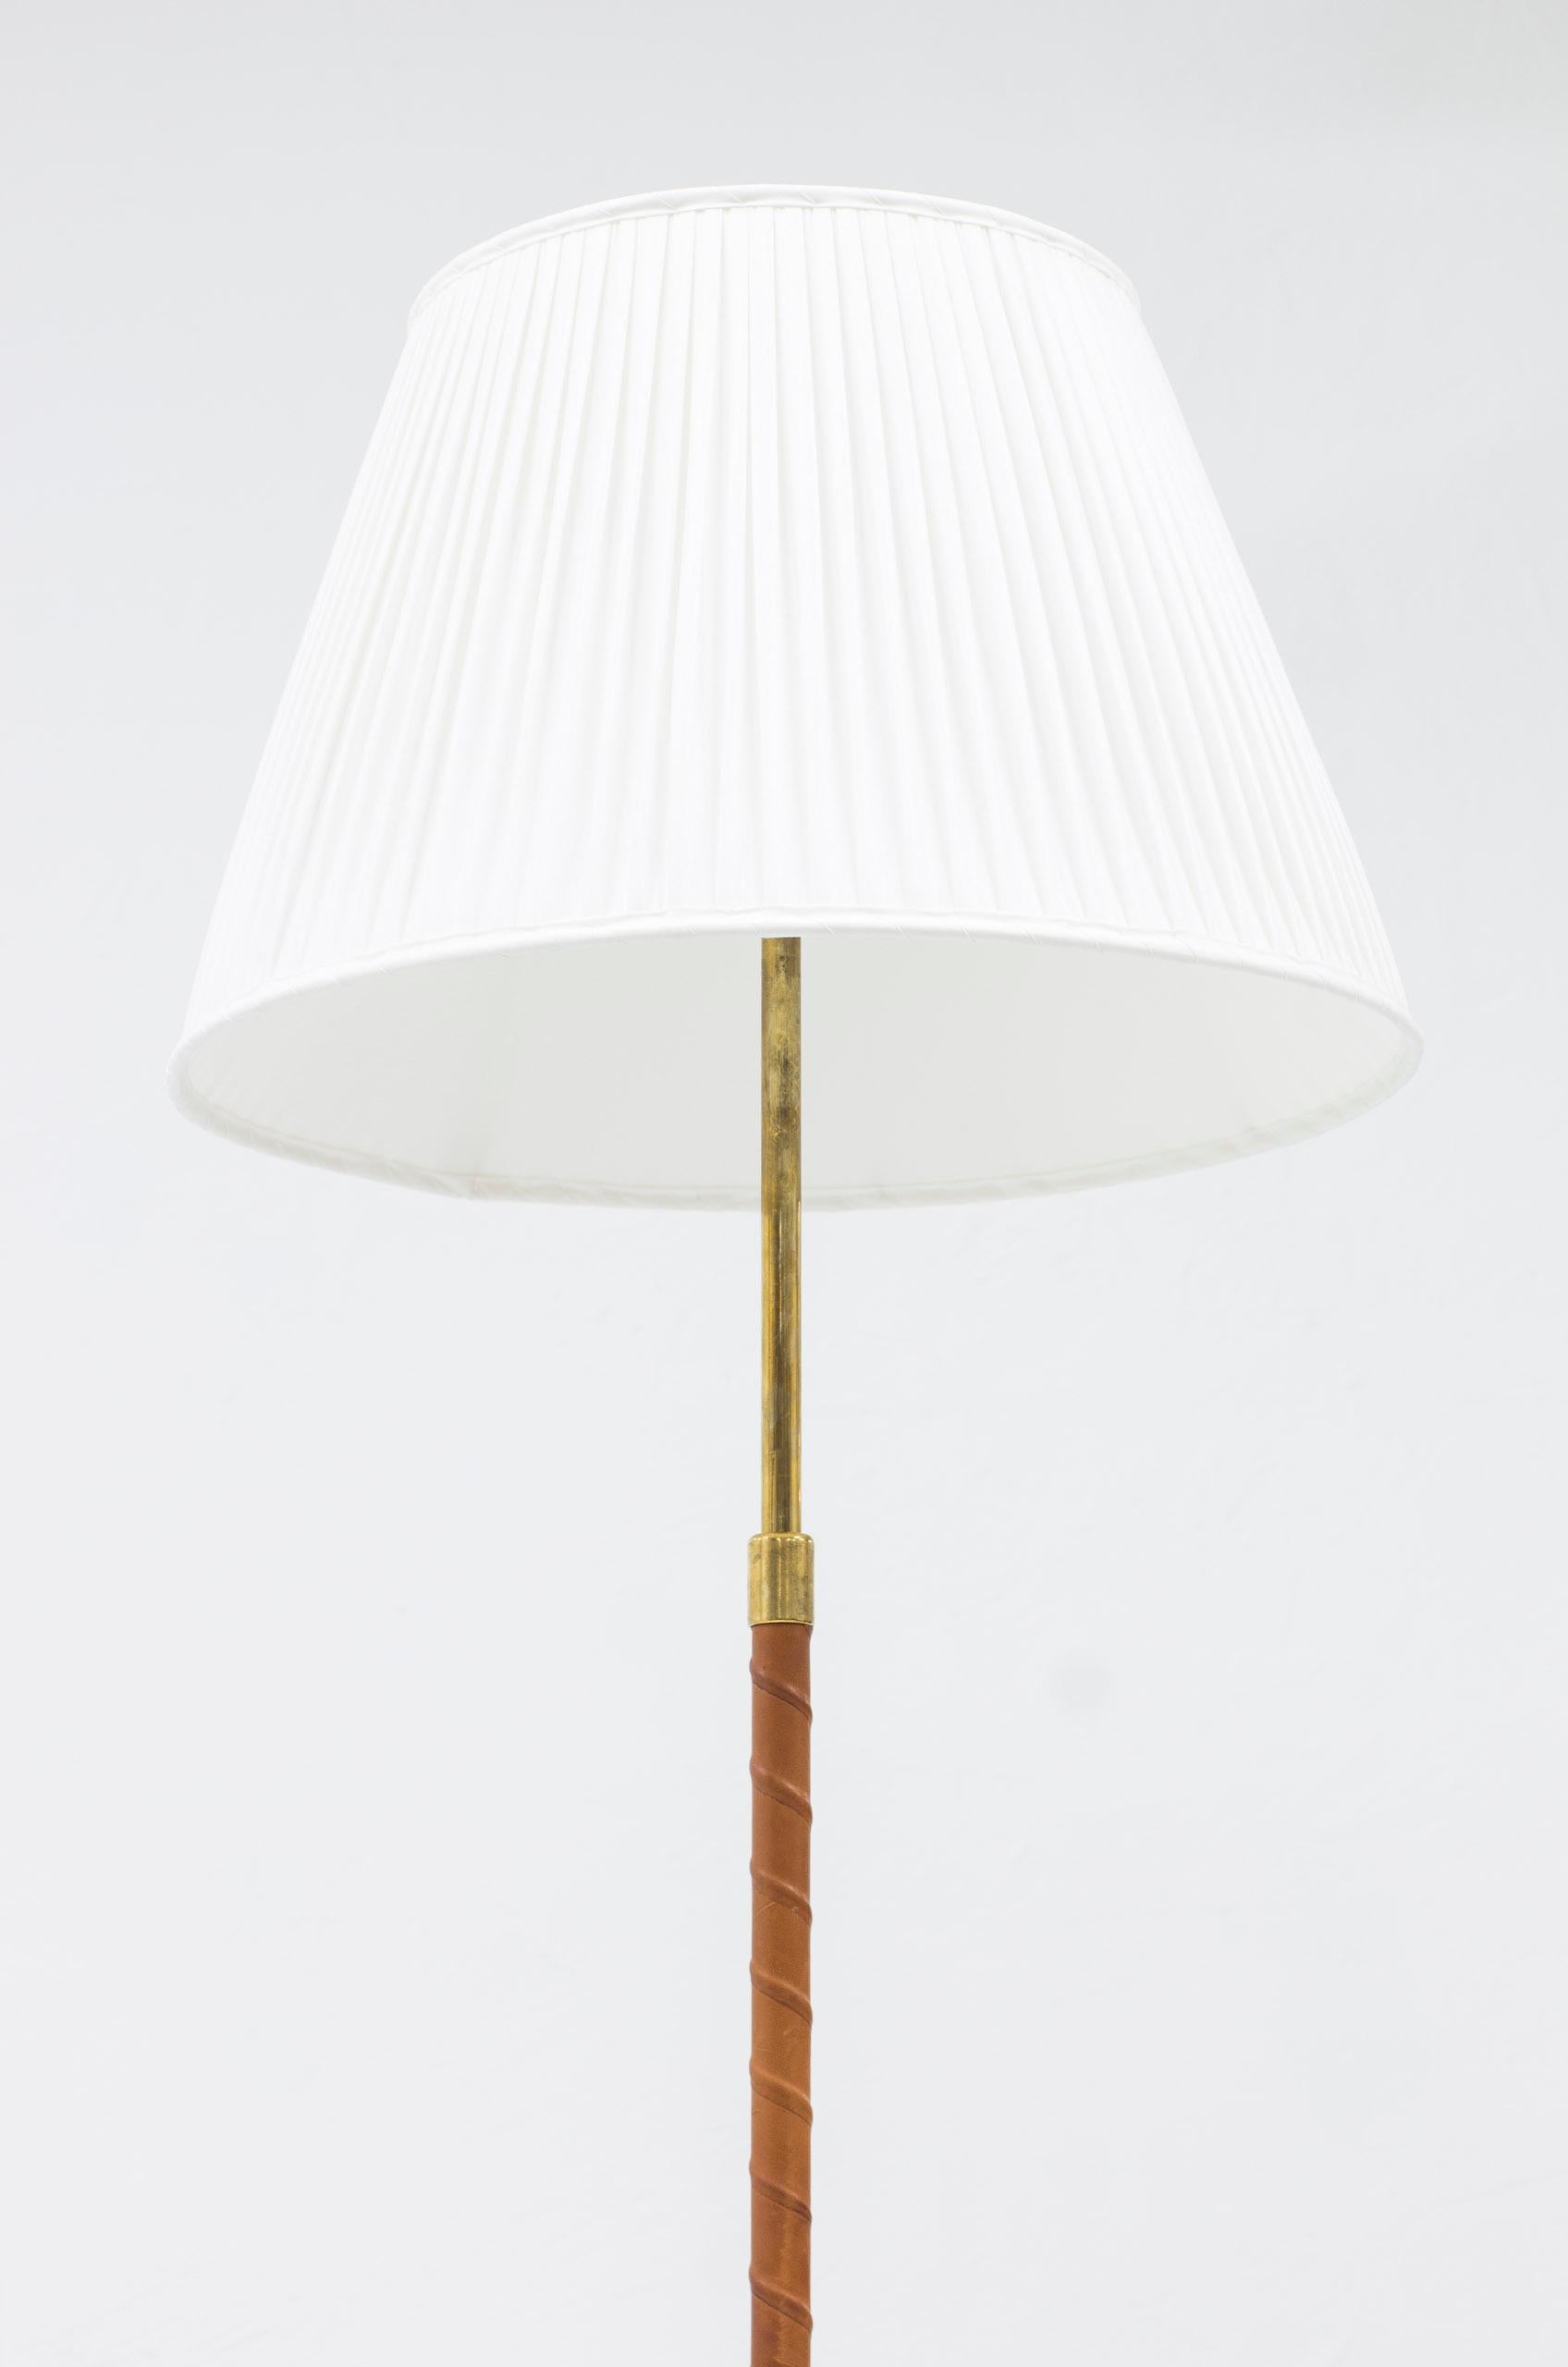 Scandinavian Modern Leather and Brass Floor Lamp by Bertil Brisborg for NK, Sweden, 1940s For Sale